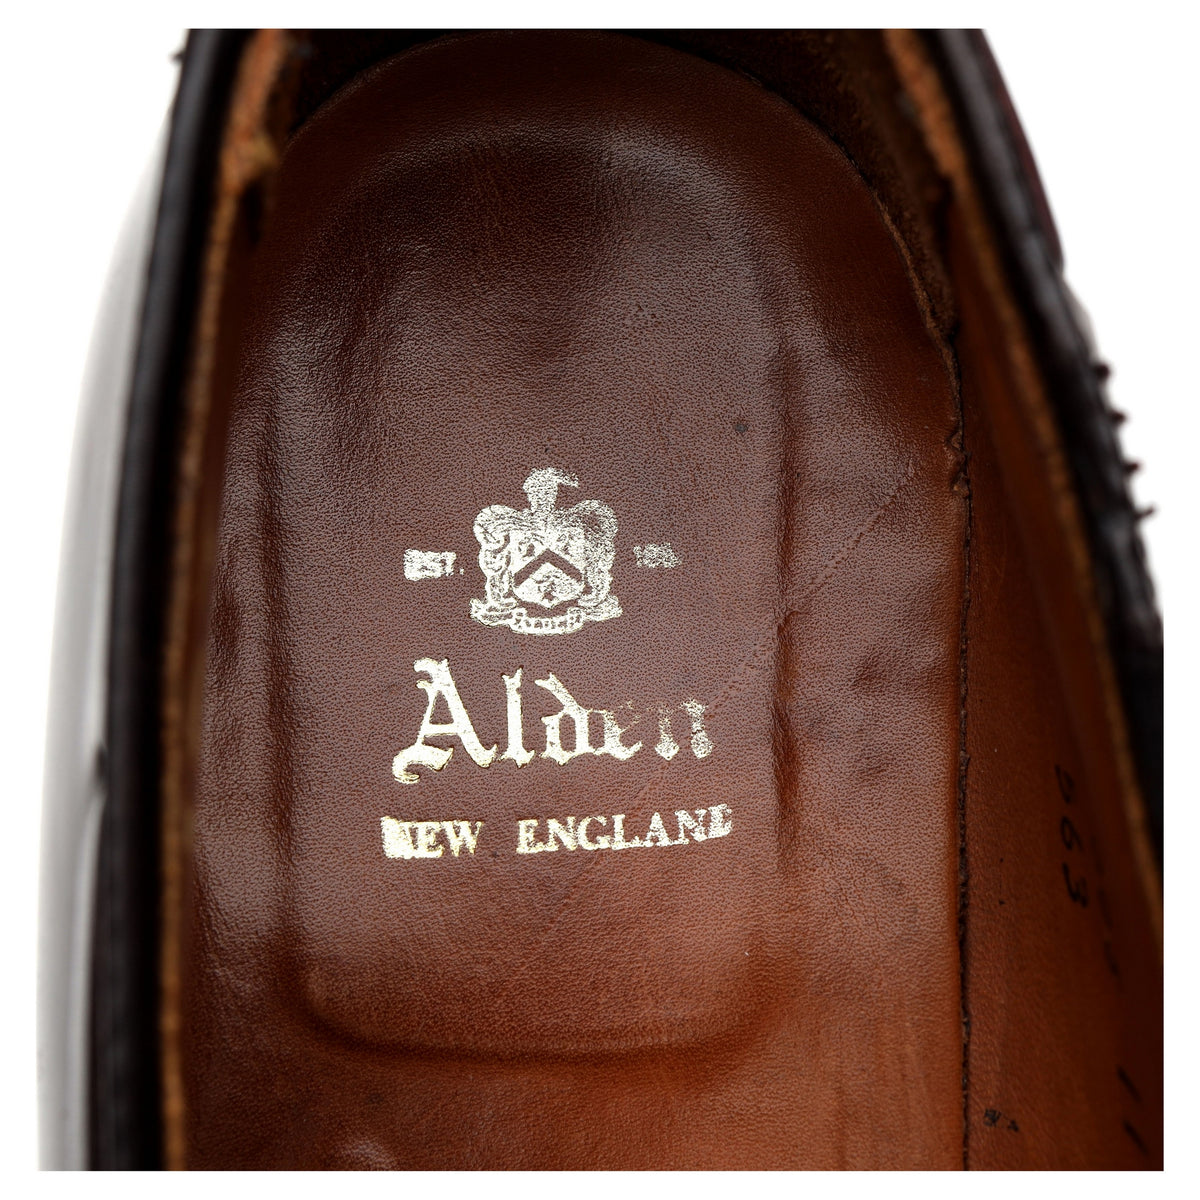 &#39;563&#39; Burgundy Cordovan Leather Tassel Loafers UK 7 US 7.5